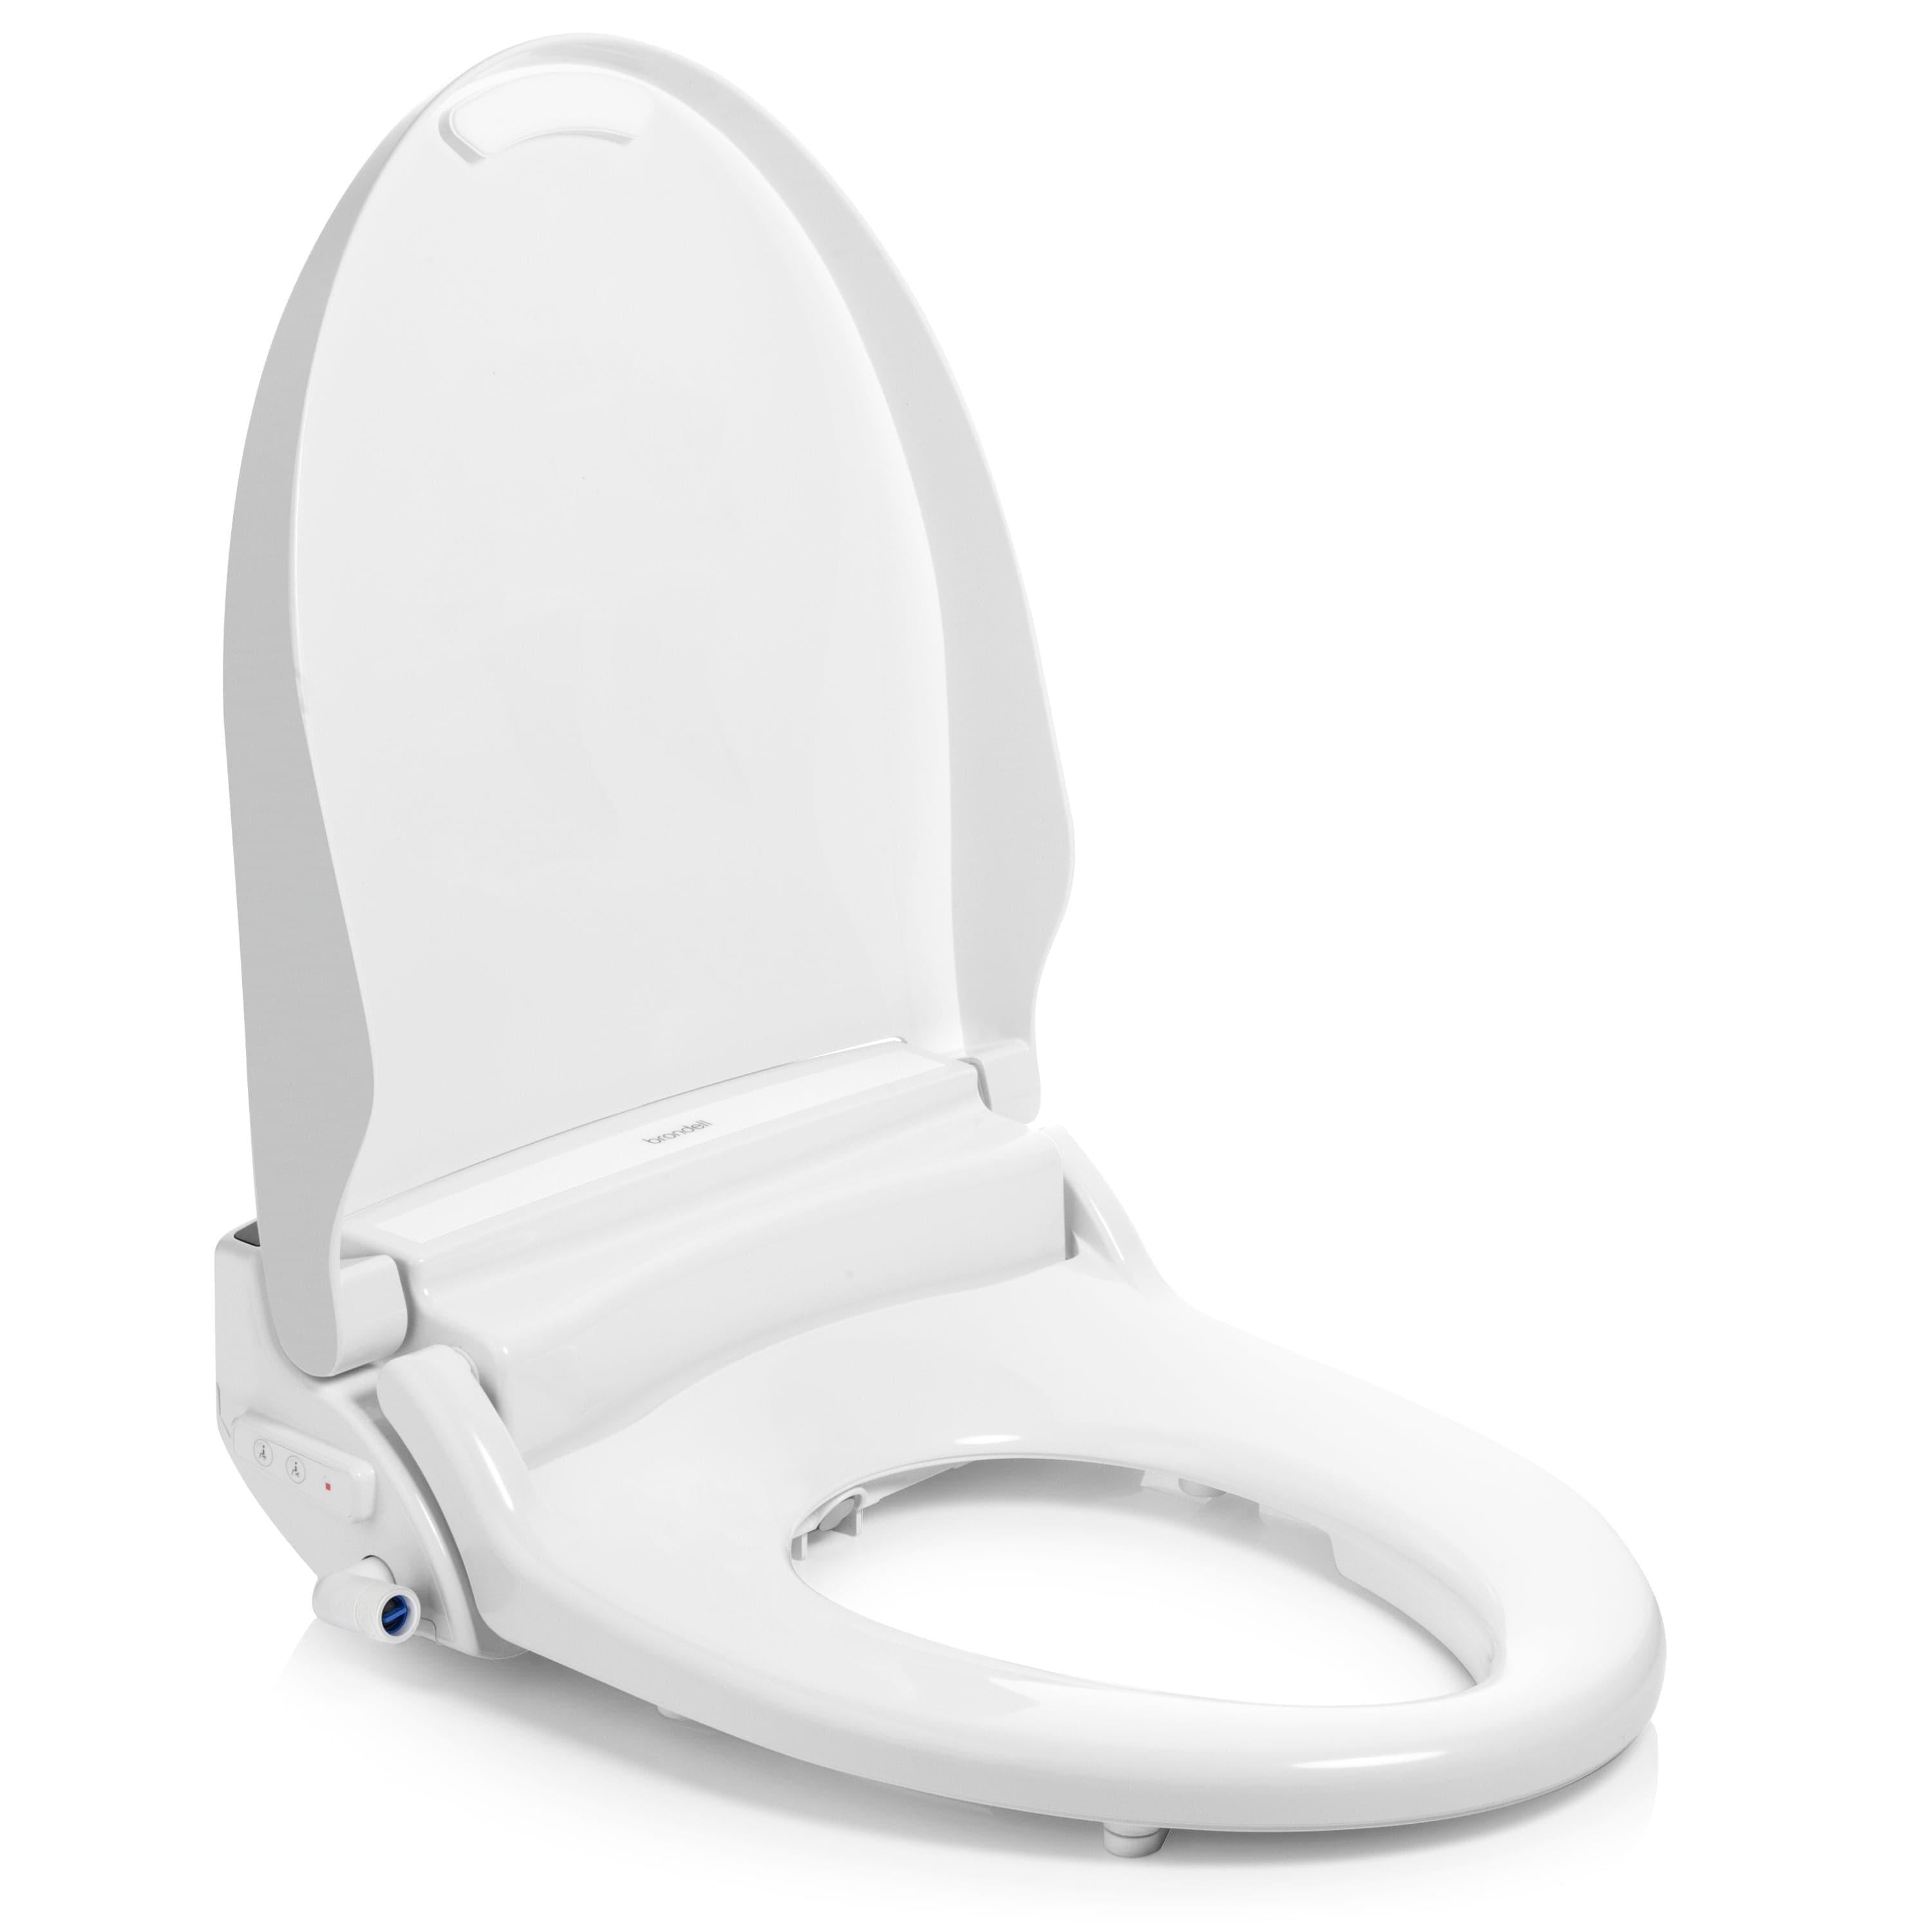 Brondell Bidet Toilet Seat Brondell Swash Select BL97 Bidet Toilet Seat